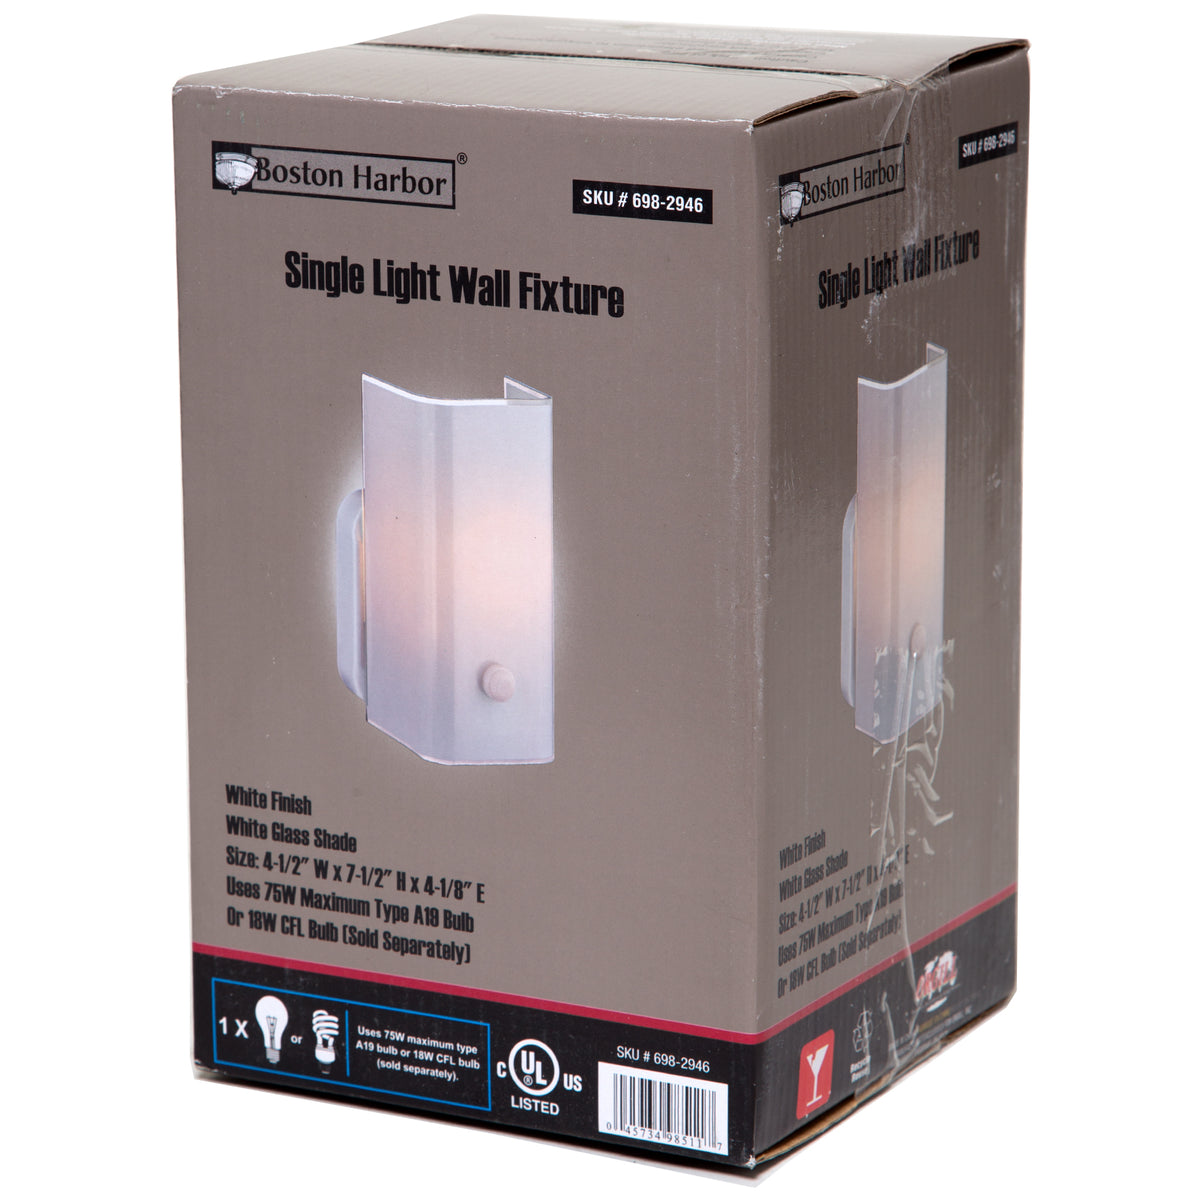 buy bathroom light fixtures at cheap rate in bulk. wholesale & retail lamps & light fixtures store. home décor ideas, maintenance, repair replacement parts